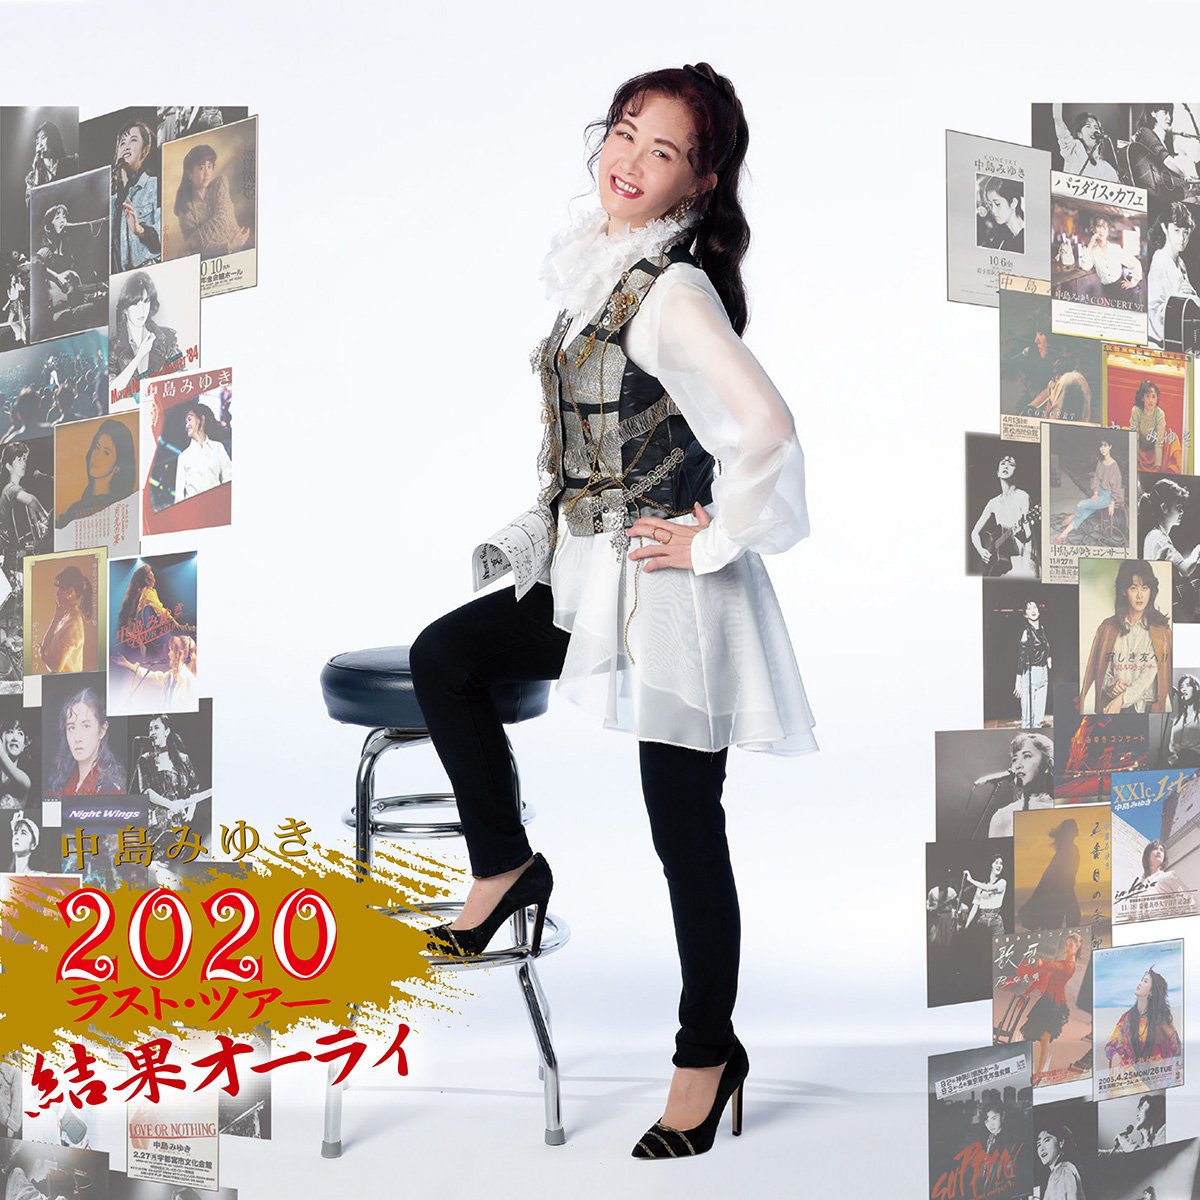 CD Shop - NAKAJIMA, MIYUKI NAKAJIMA MIYUKI 2020 LAST TOUR